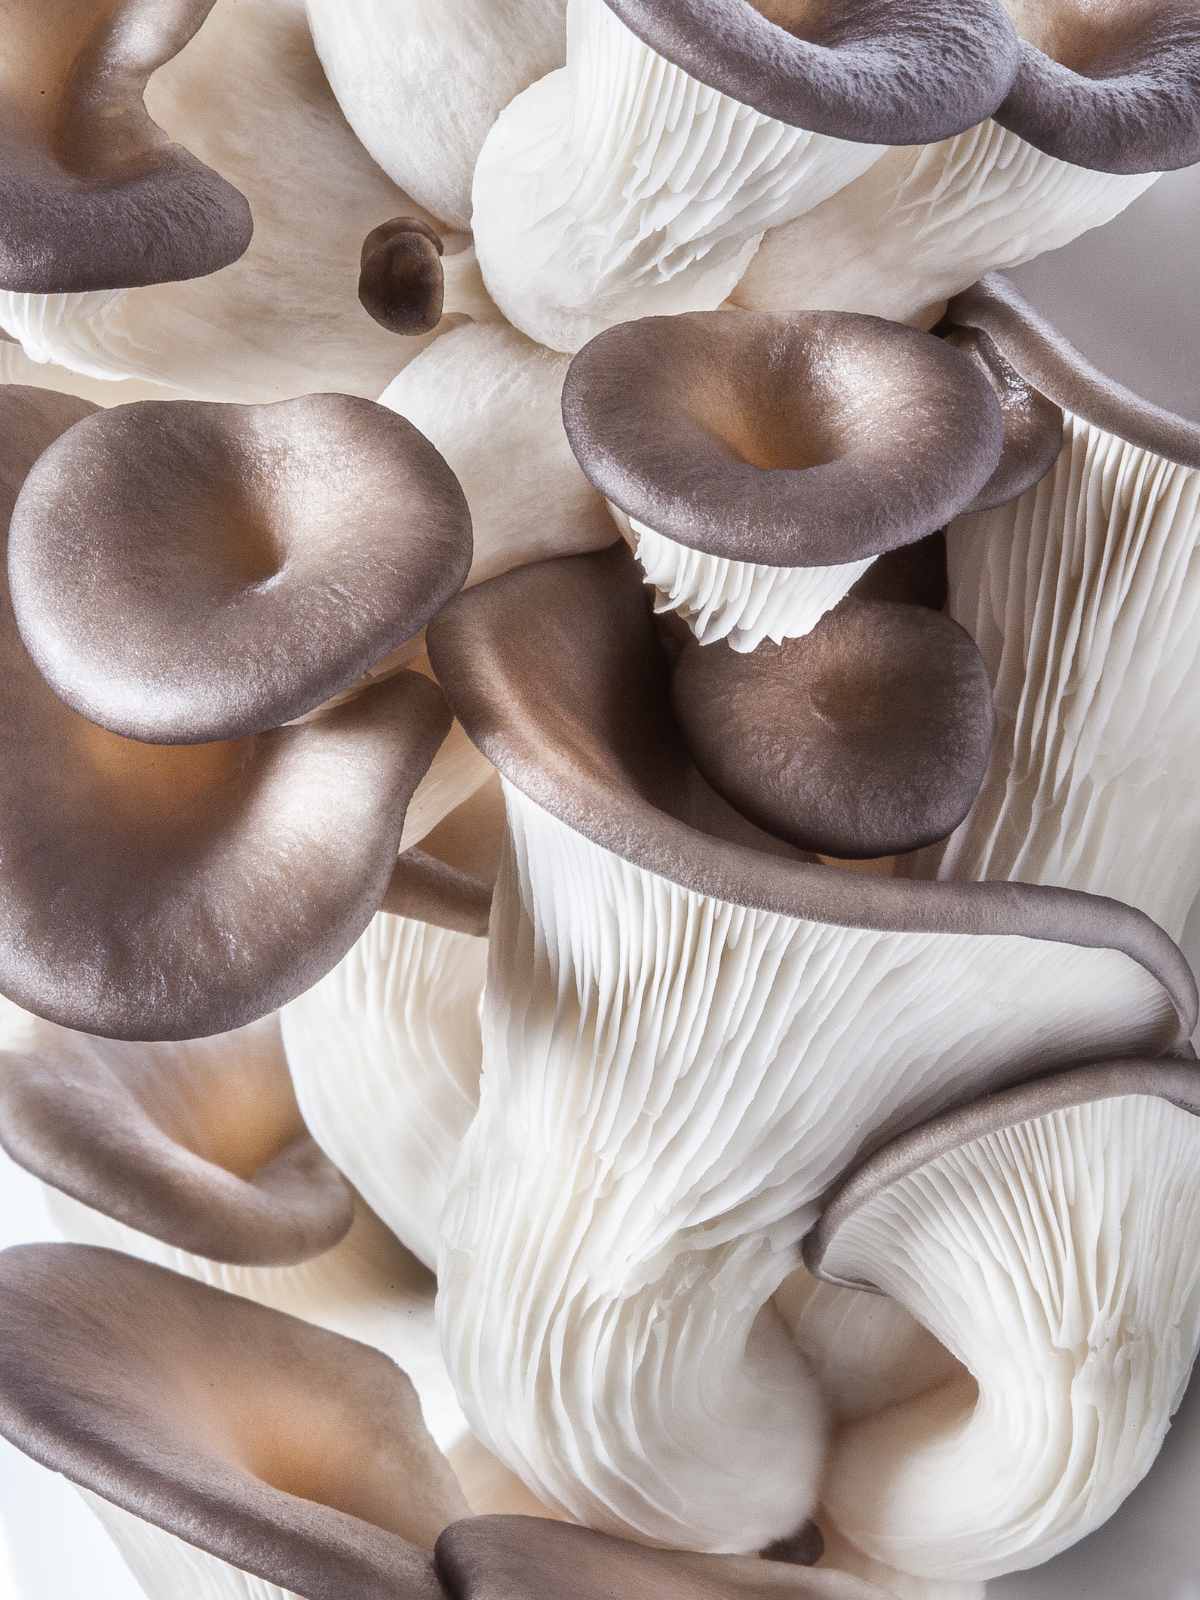 freeze mushrooms